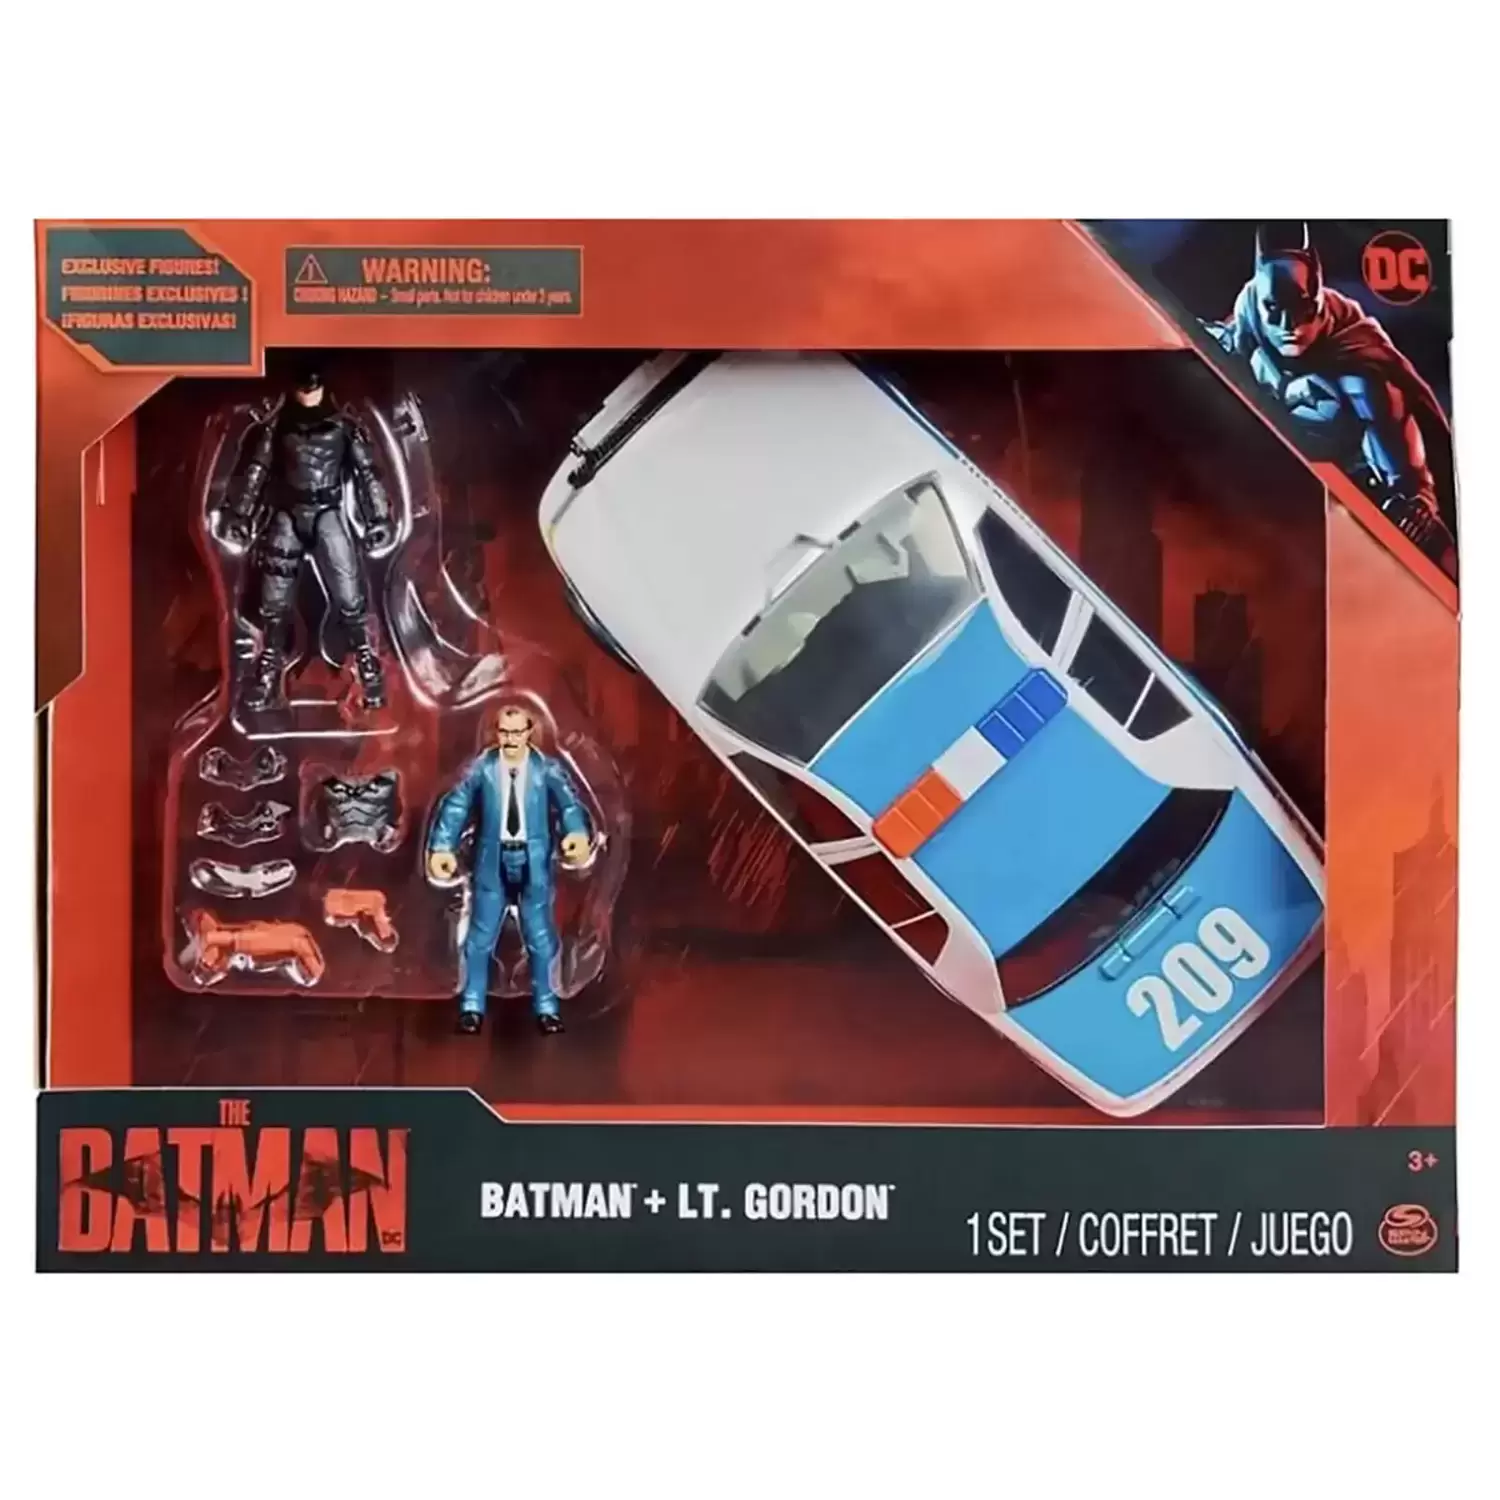 The Batman Action Figures - Batman + Lt. Gordon